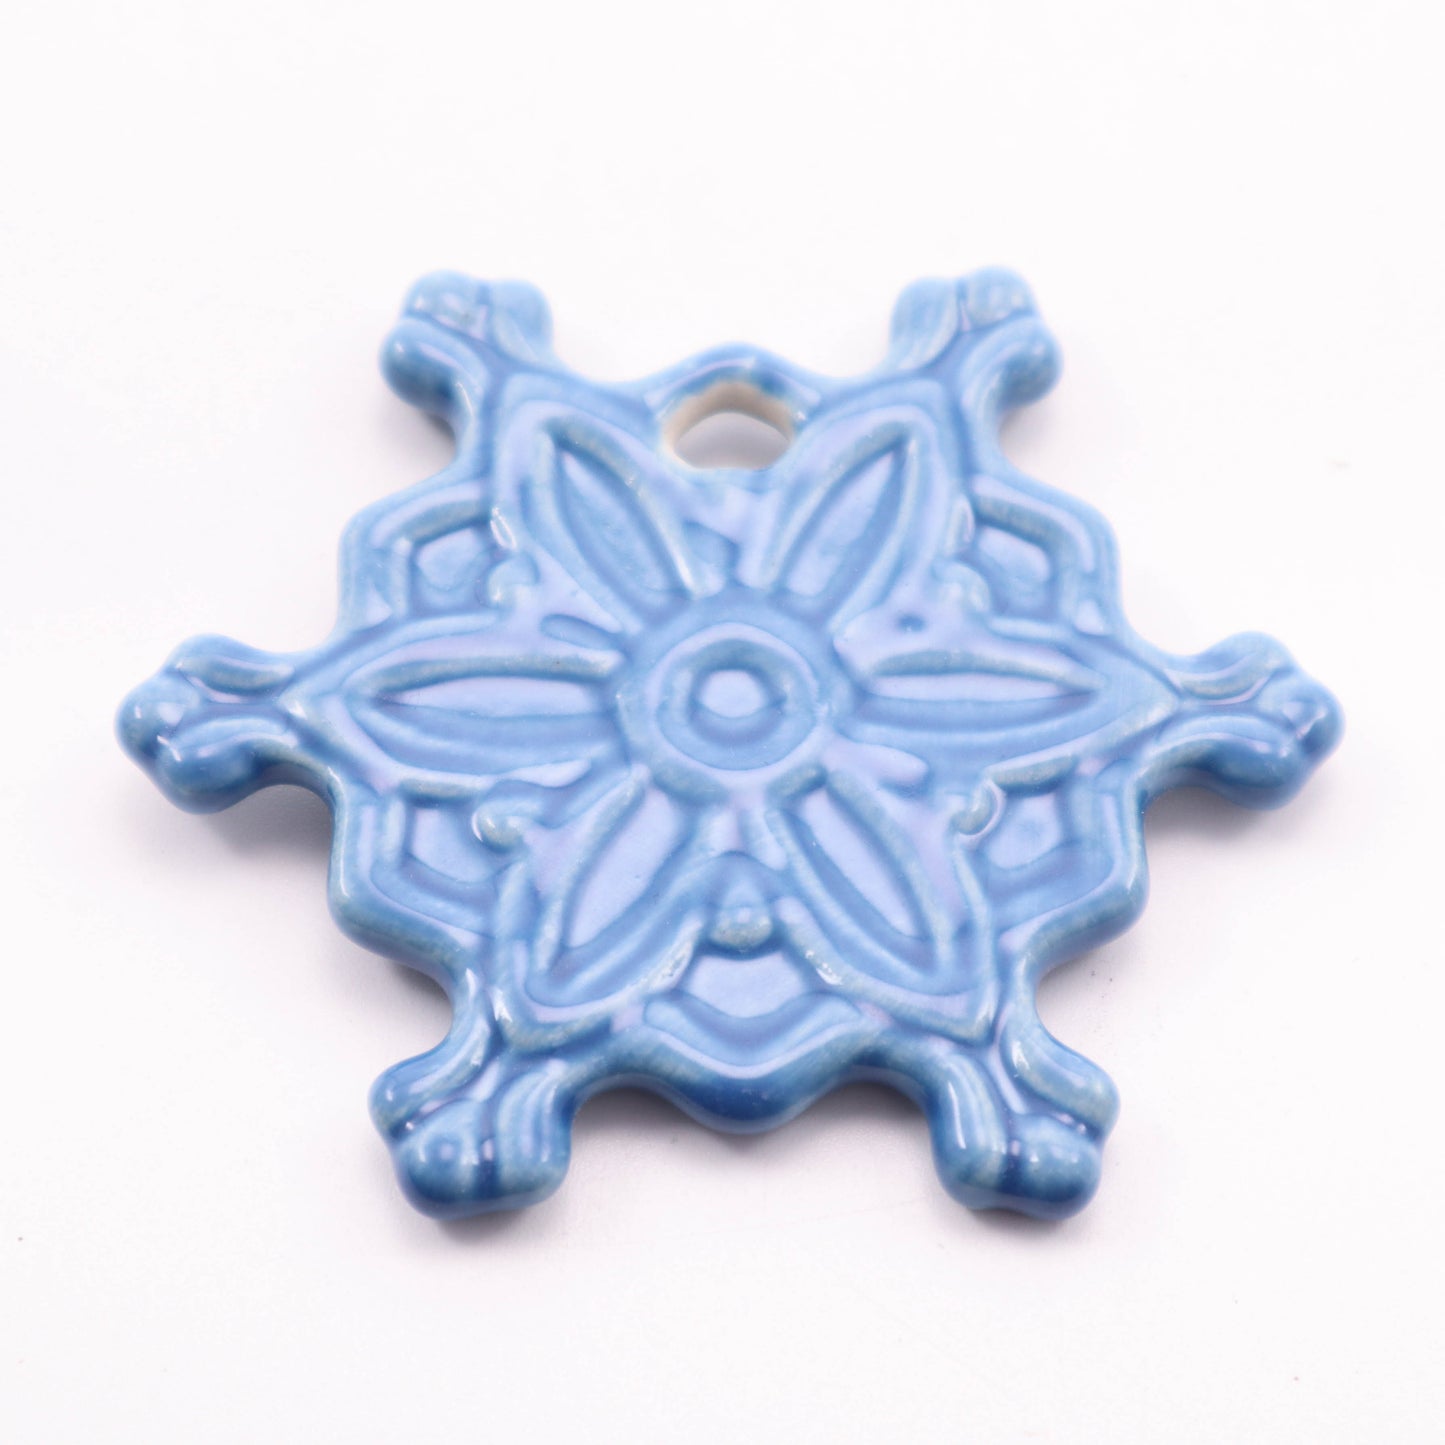 2.5" Snowflake Ornament. Pattern: Blue